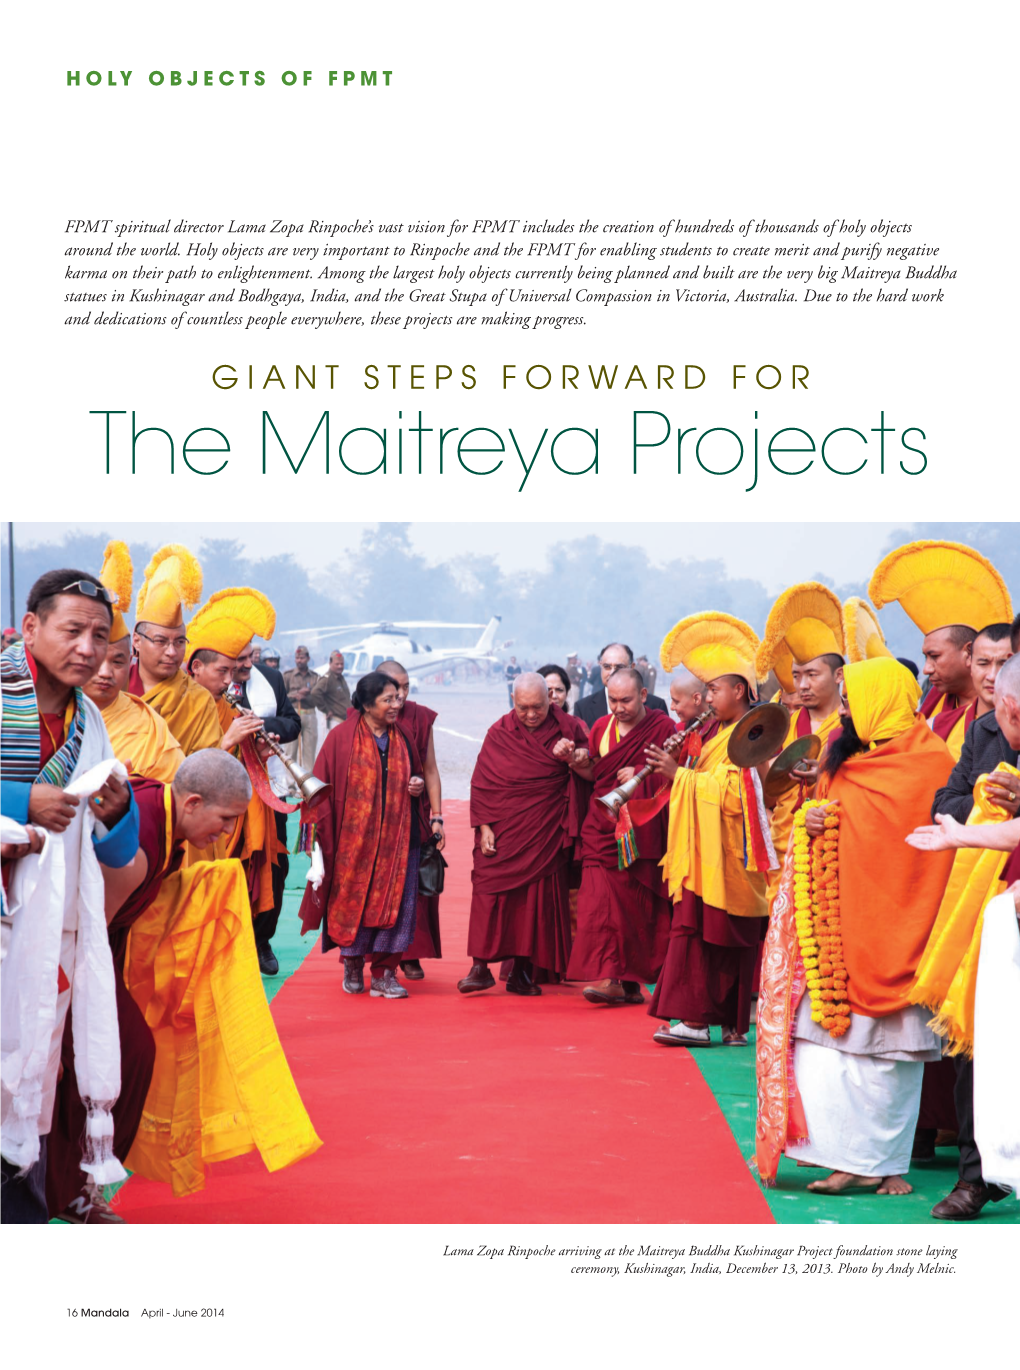 The Maitreya Projects